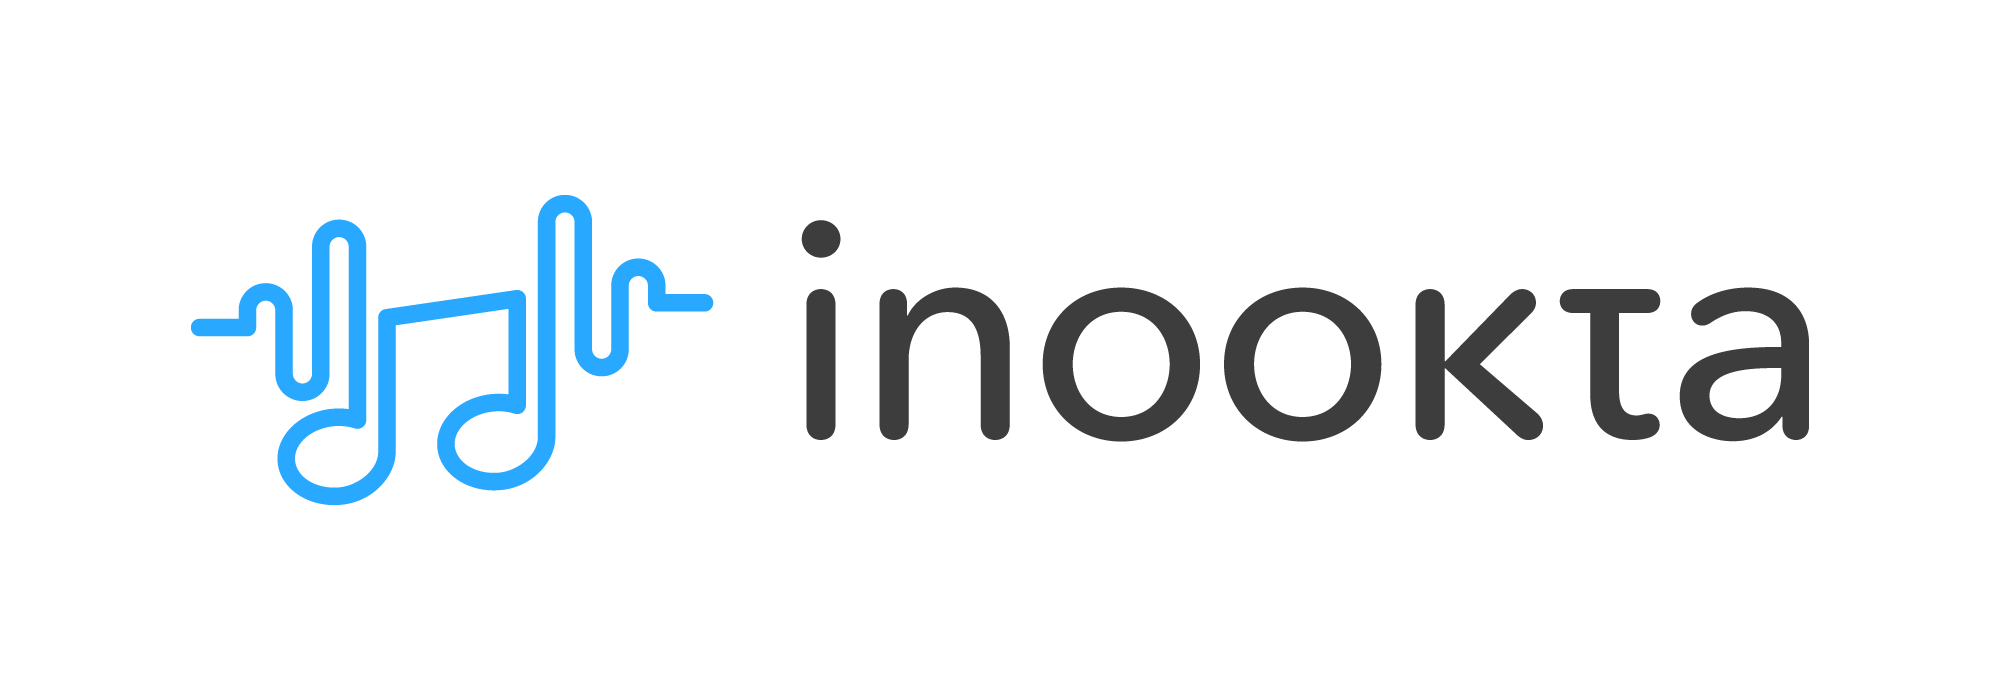 inookta logo